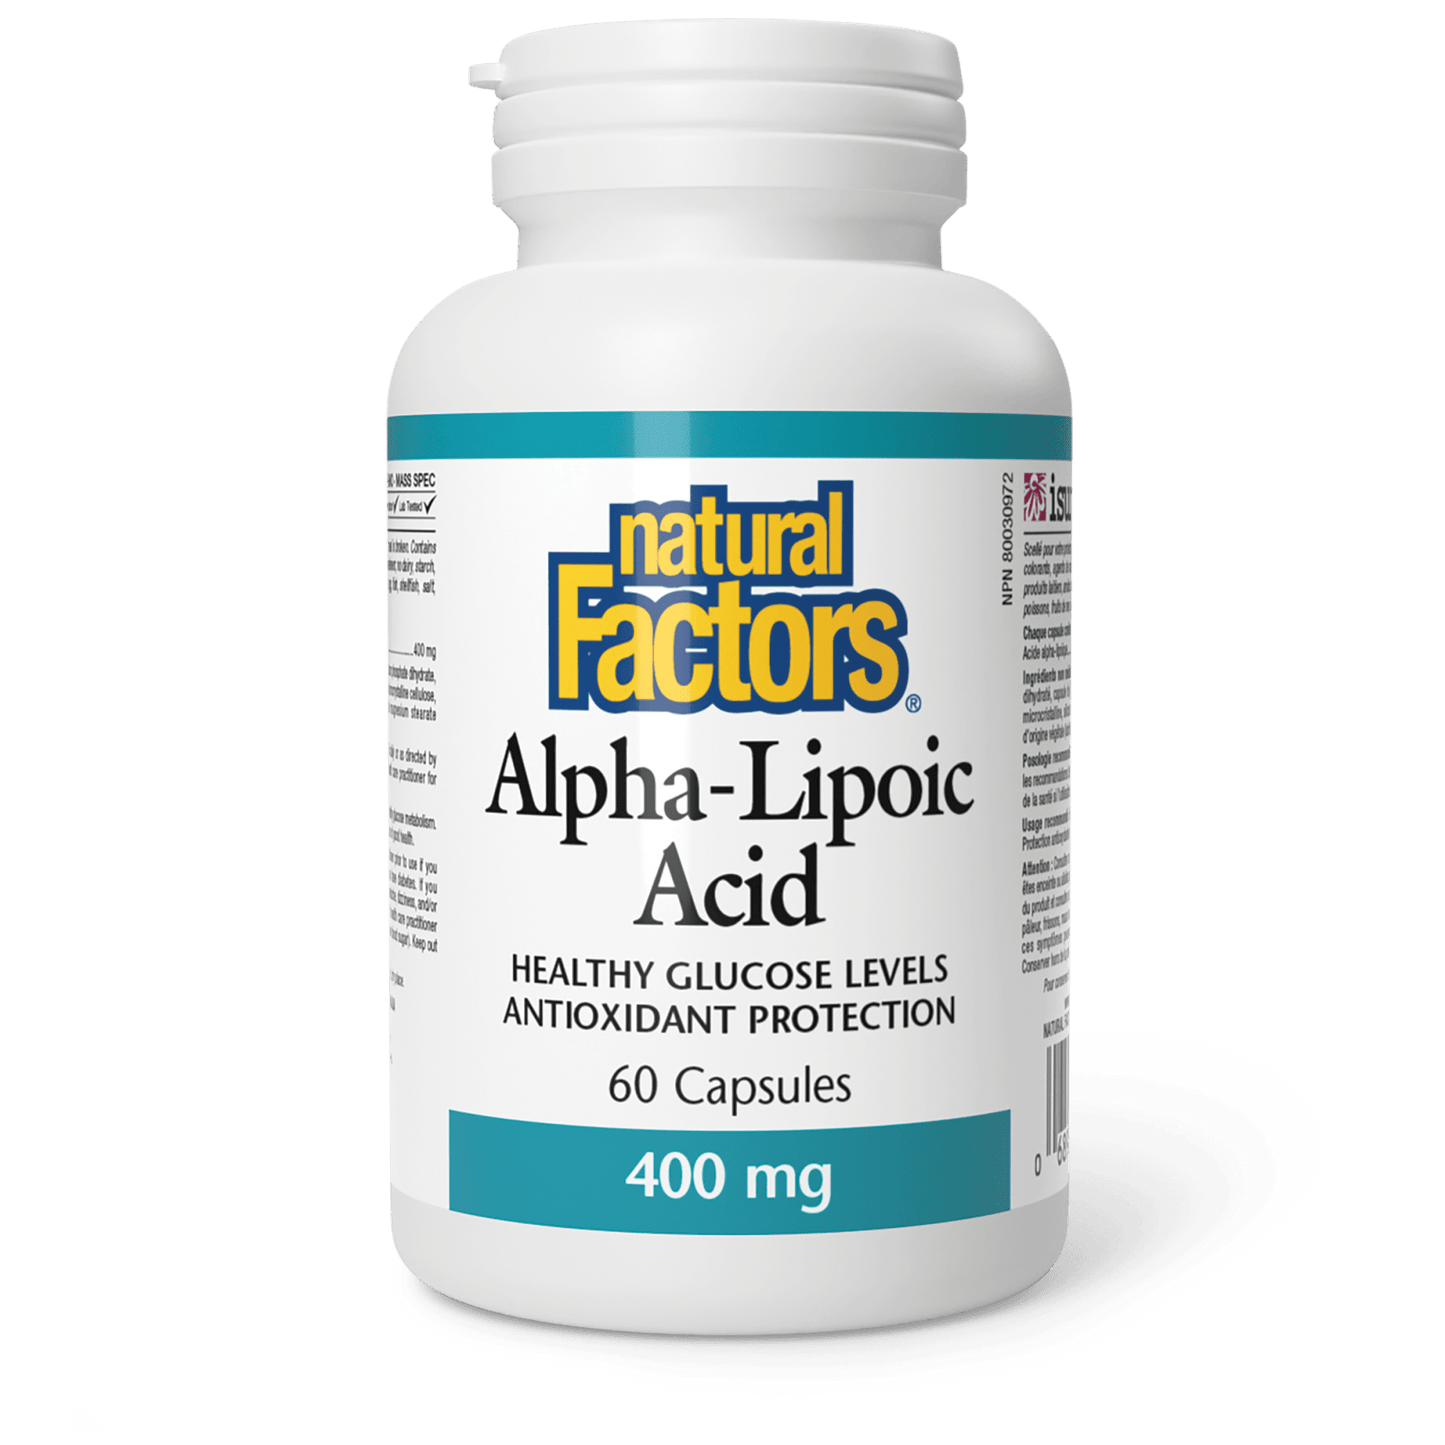 Alpha-Lipoic Acid 400 mg, Natural Factors|v|image|2101